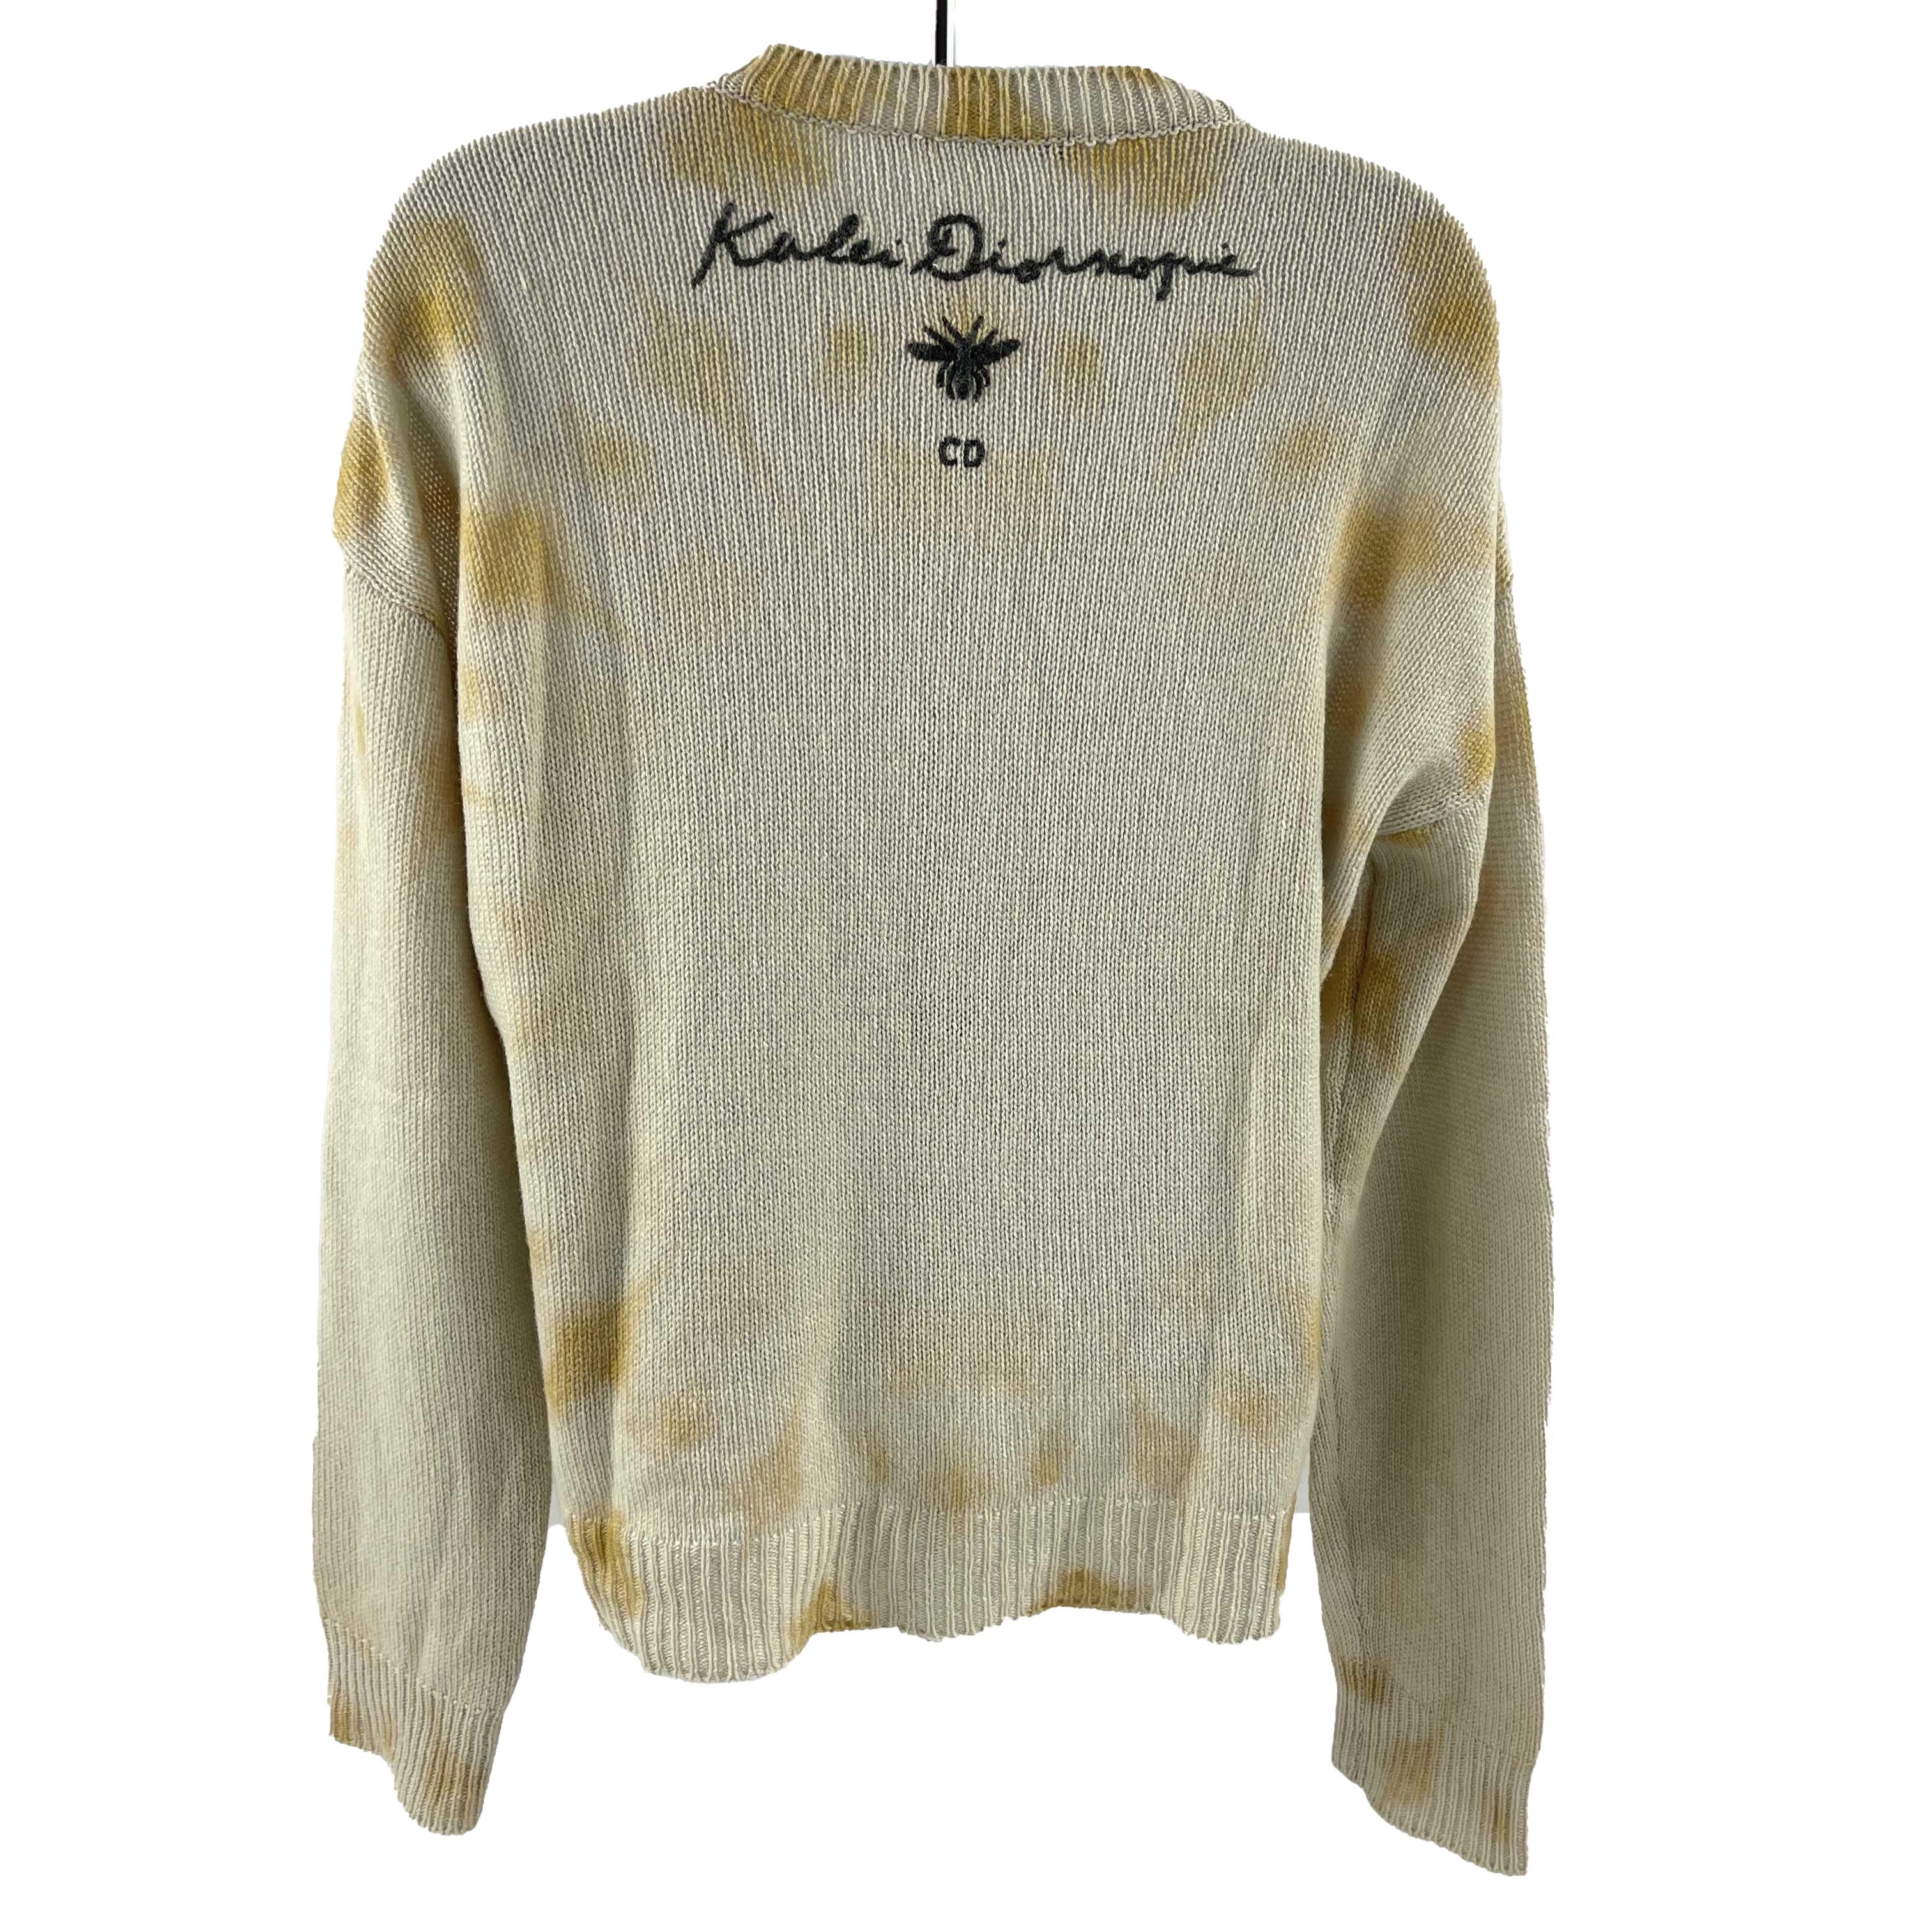 Christian Dior Fantaisie Kalei Diorscopic Cashmere Sweater Top 2 1